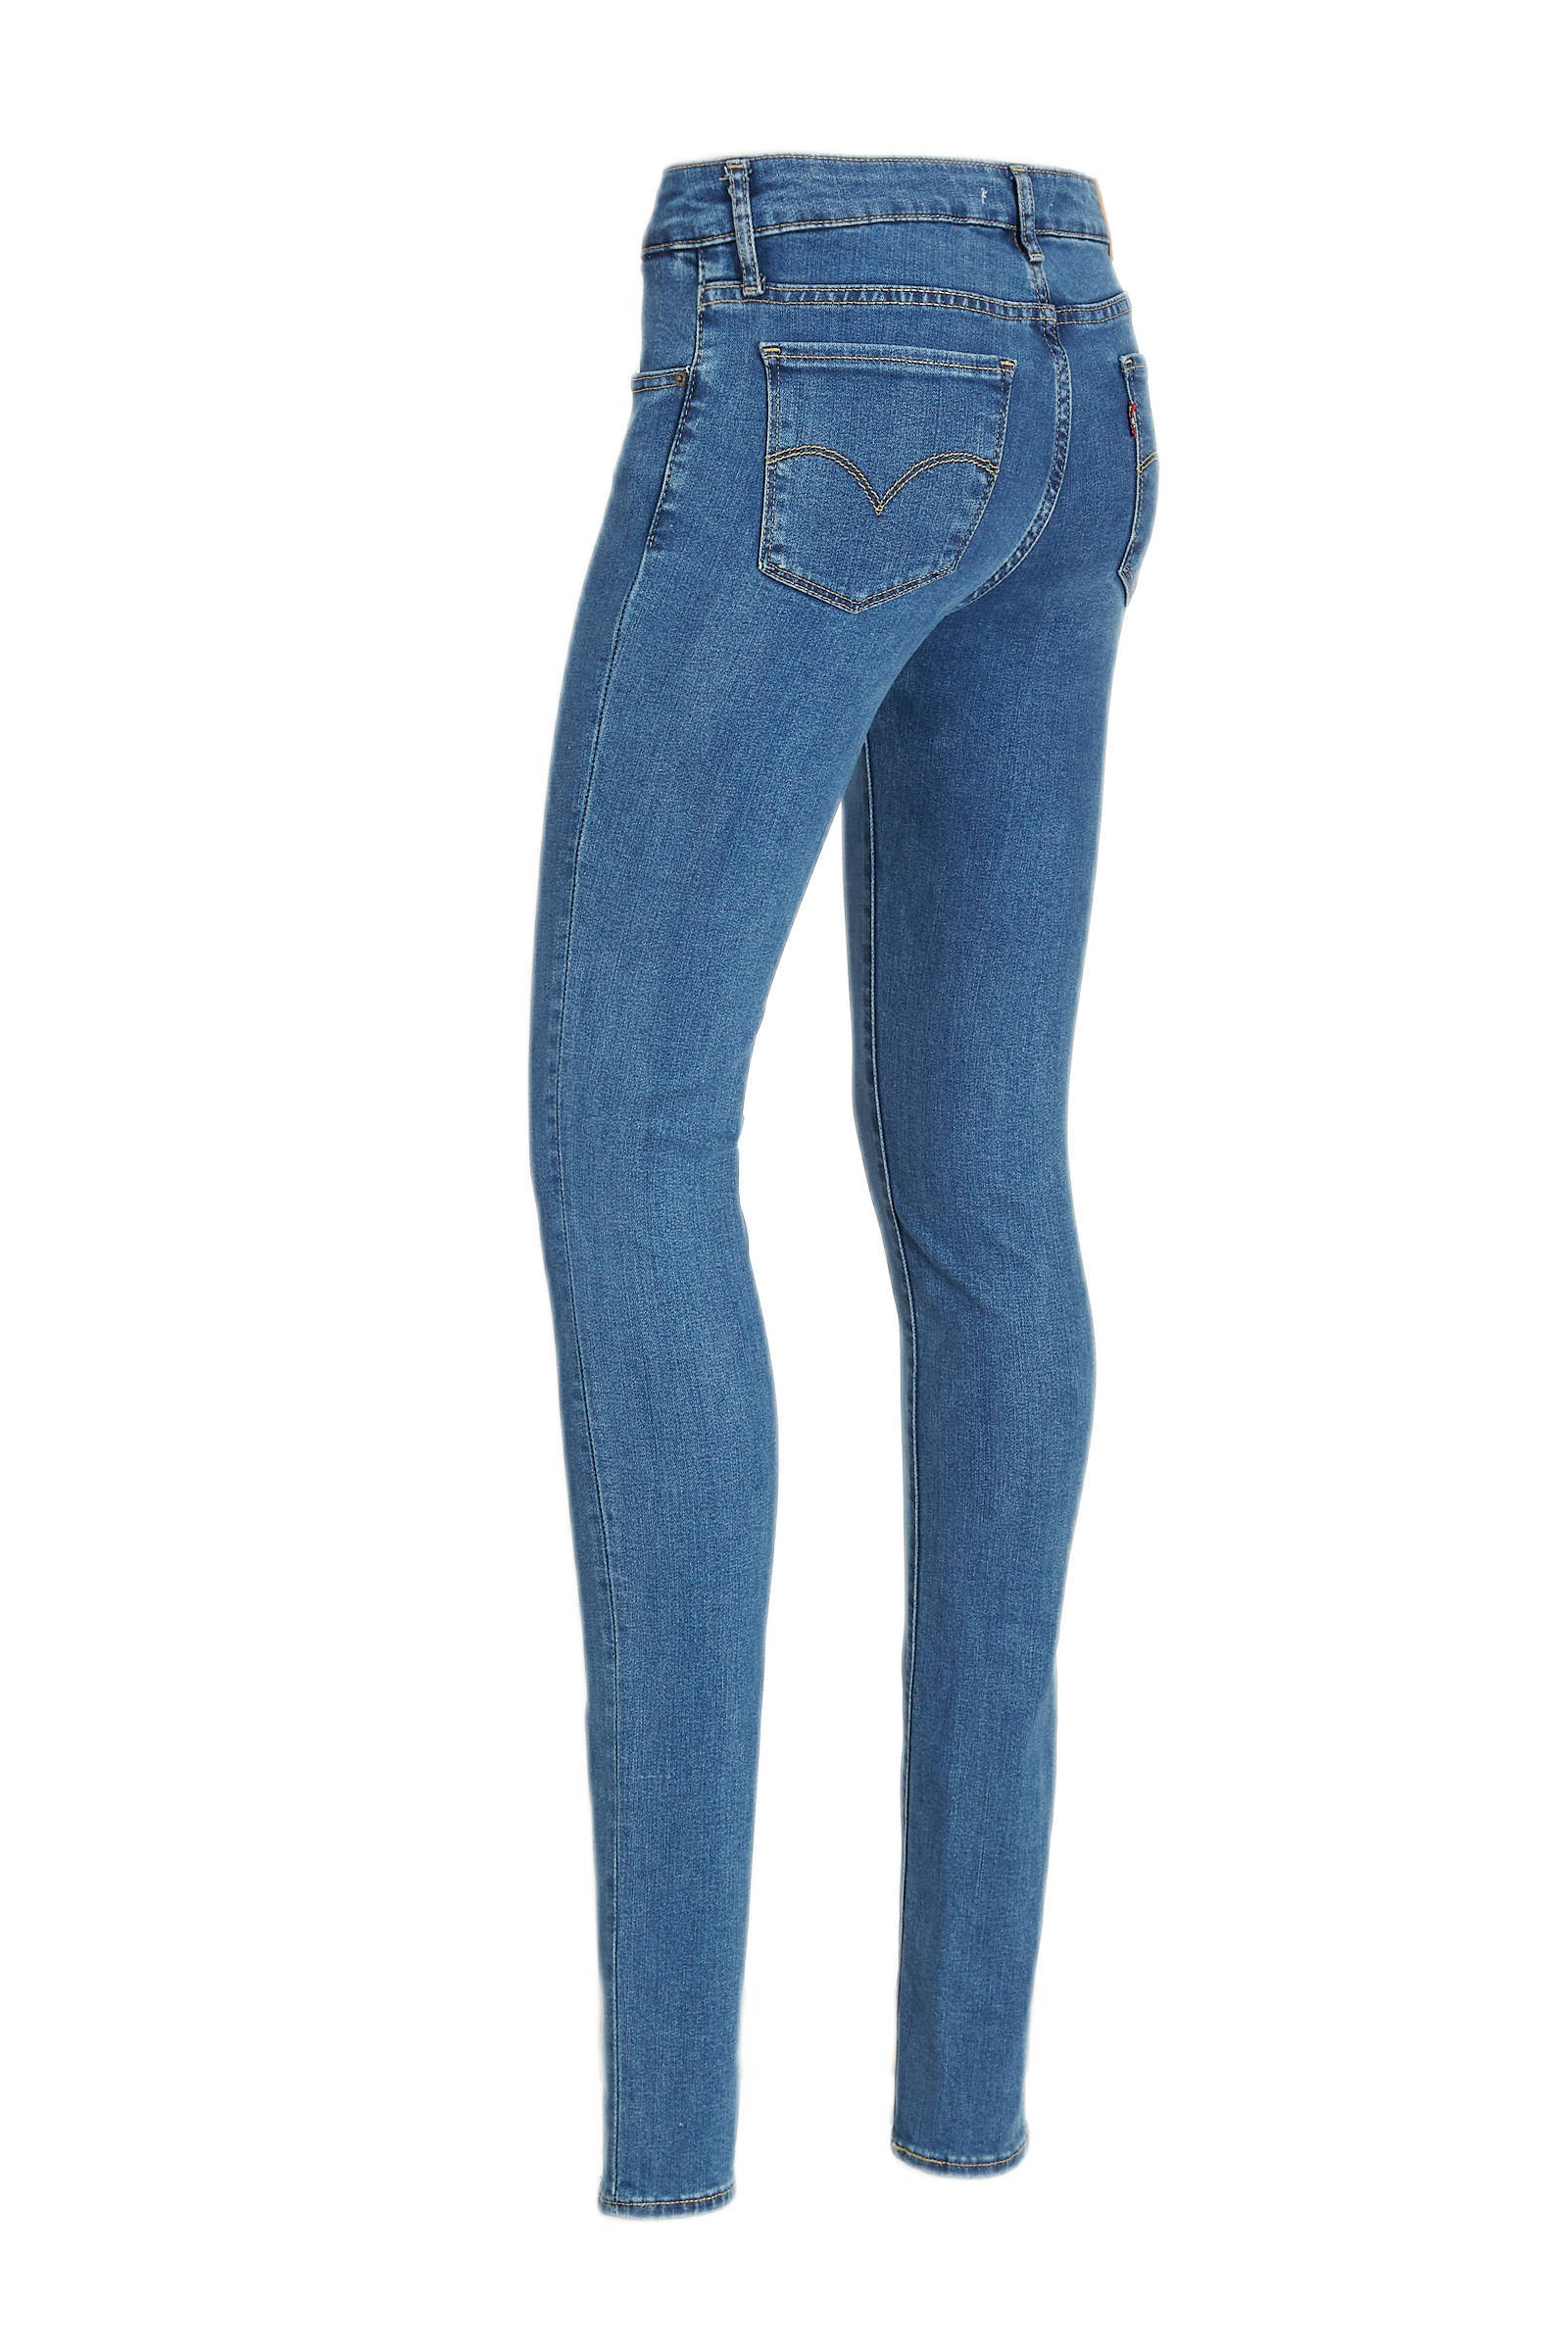 Levi's 711 skinny jeans bogota way 